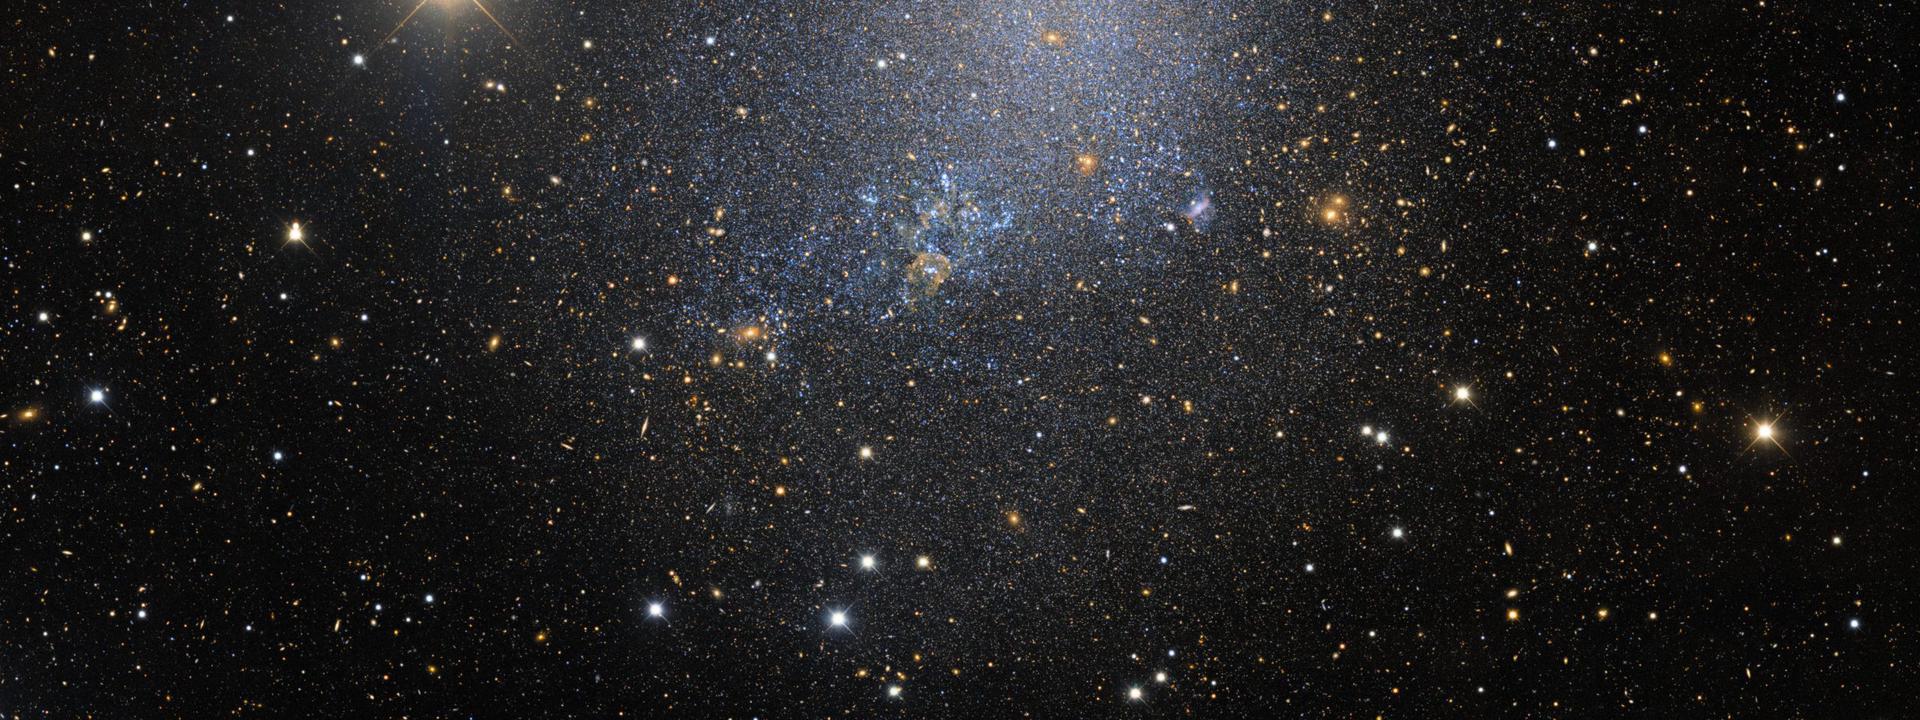 Galaxy IC 1613